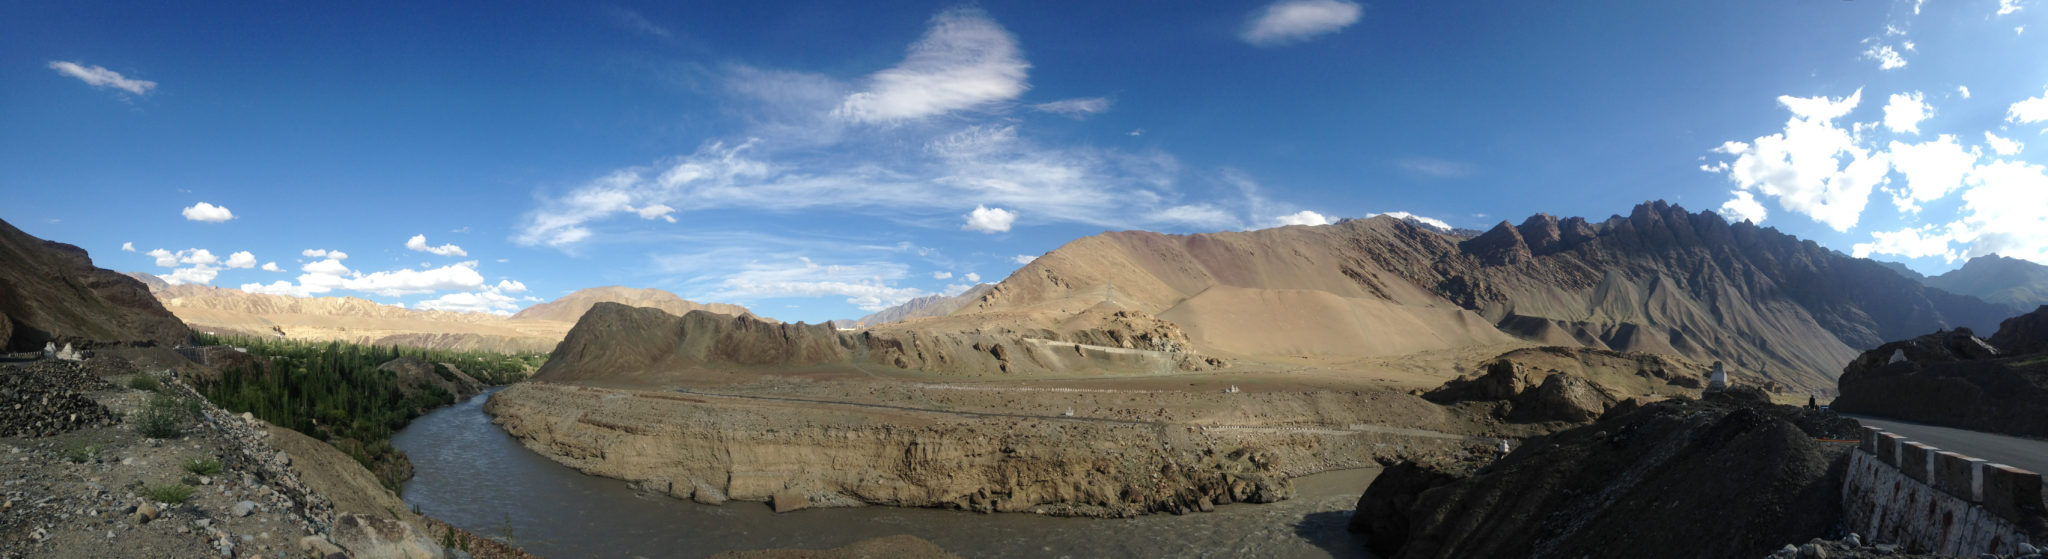 On the way to Leh - Leh Ladakh road trip from Delhi